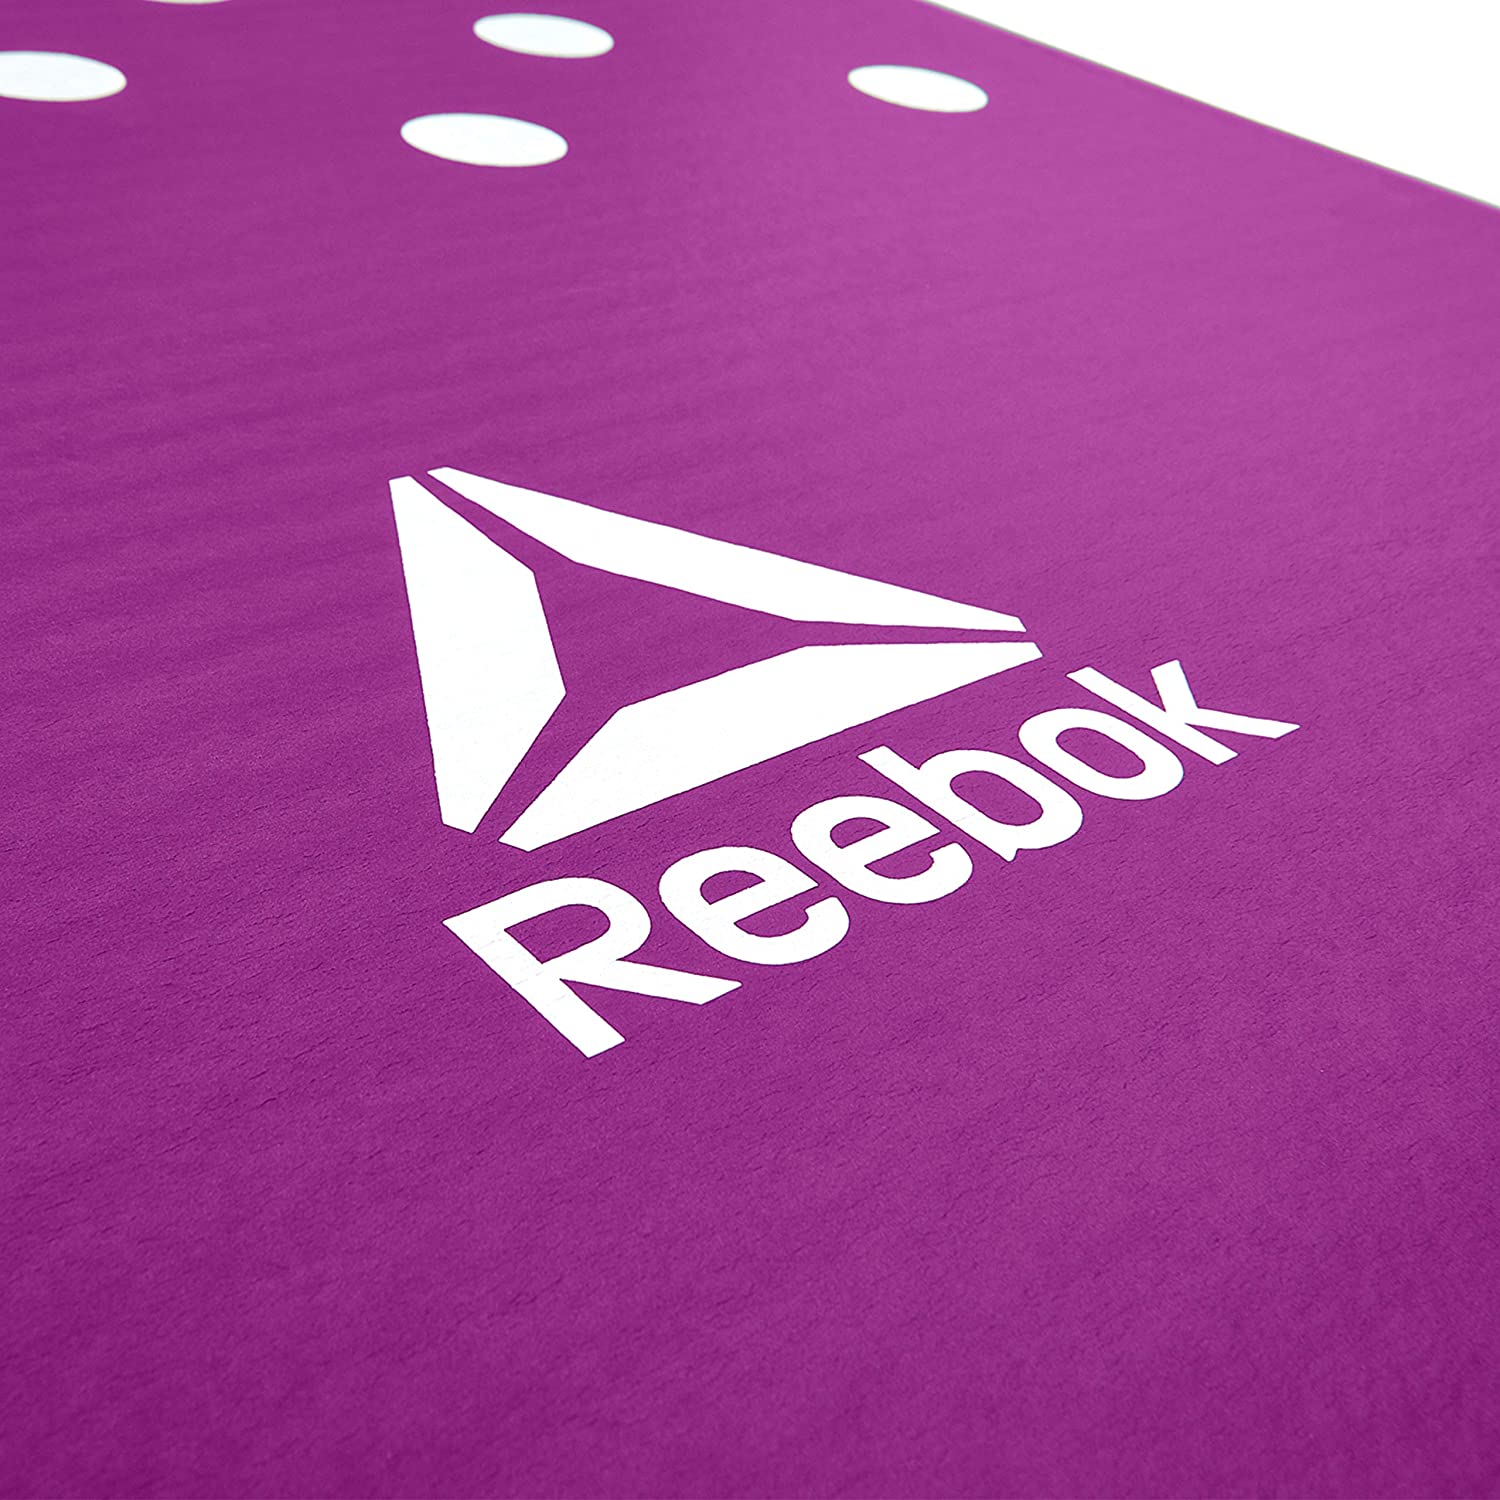 Reebok NBR Spots Unisex Training and Yoga Mat - 7 MM (Purple) - Best Price online Prokicksports.com